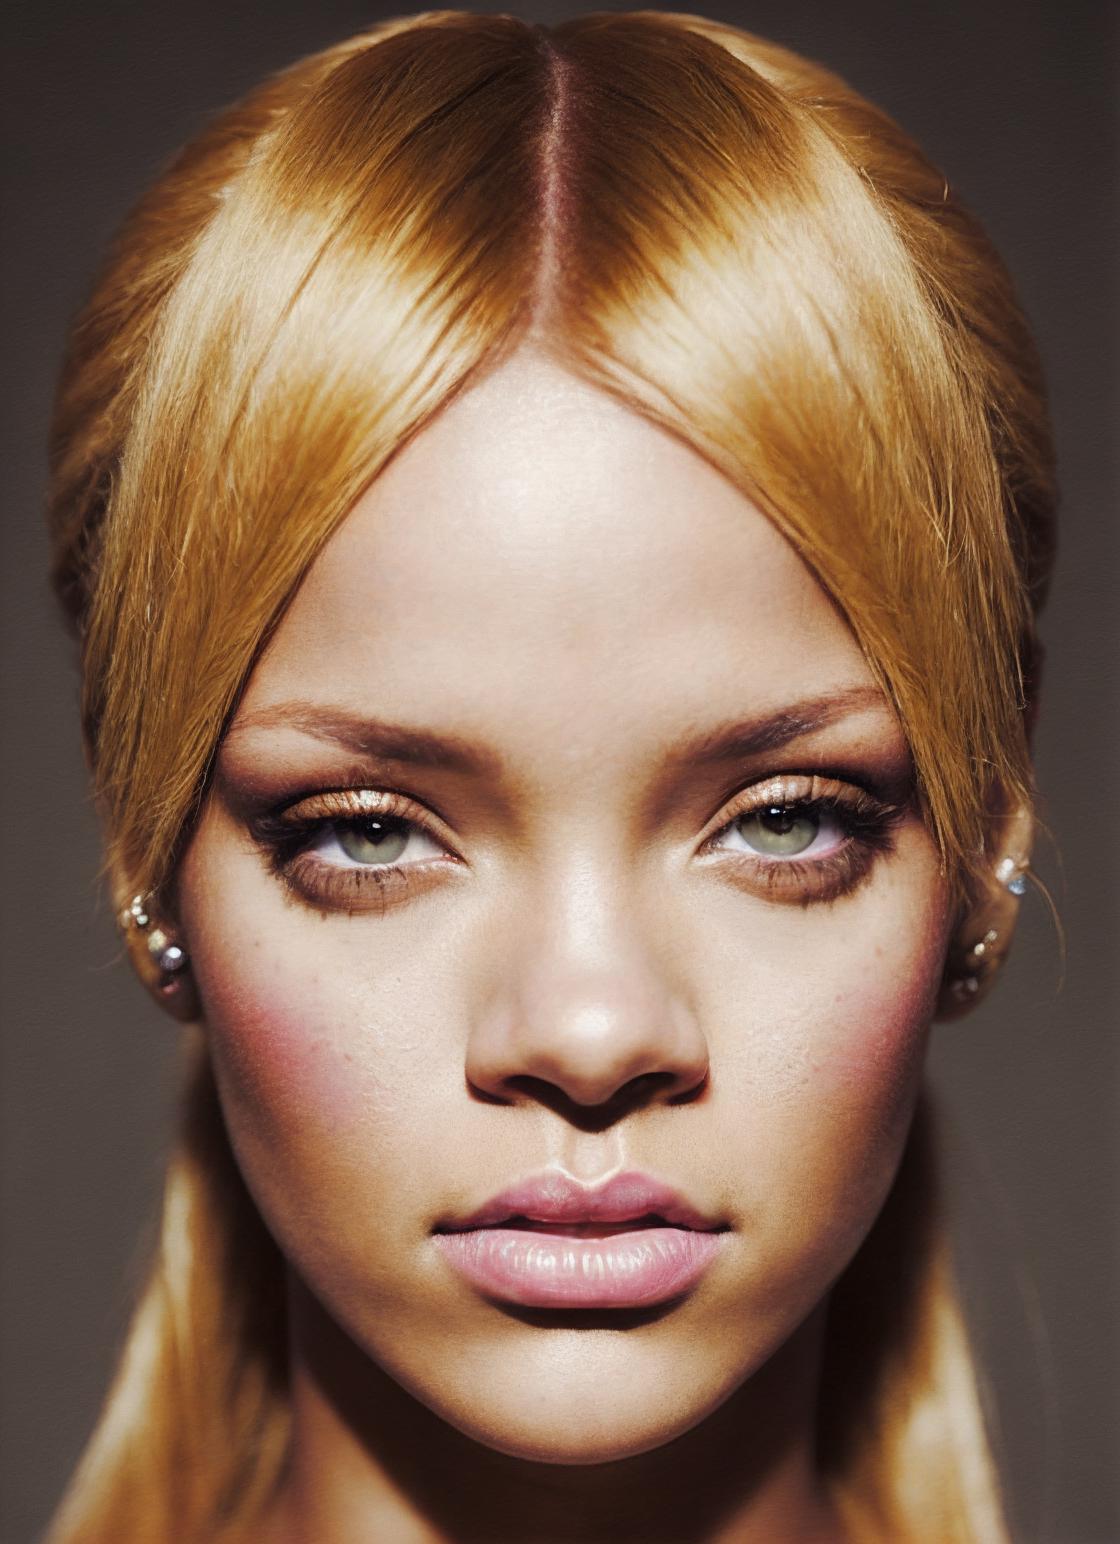 Rihanna image by malcolmrey